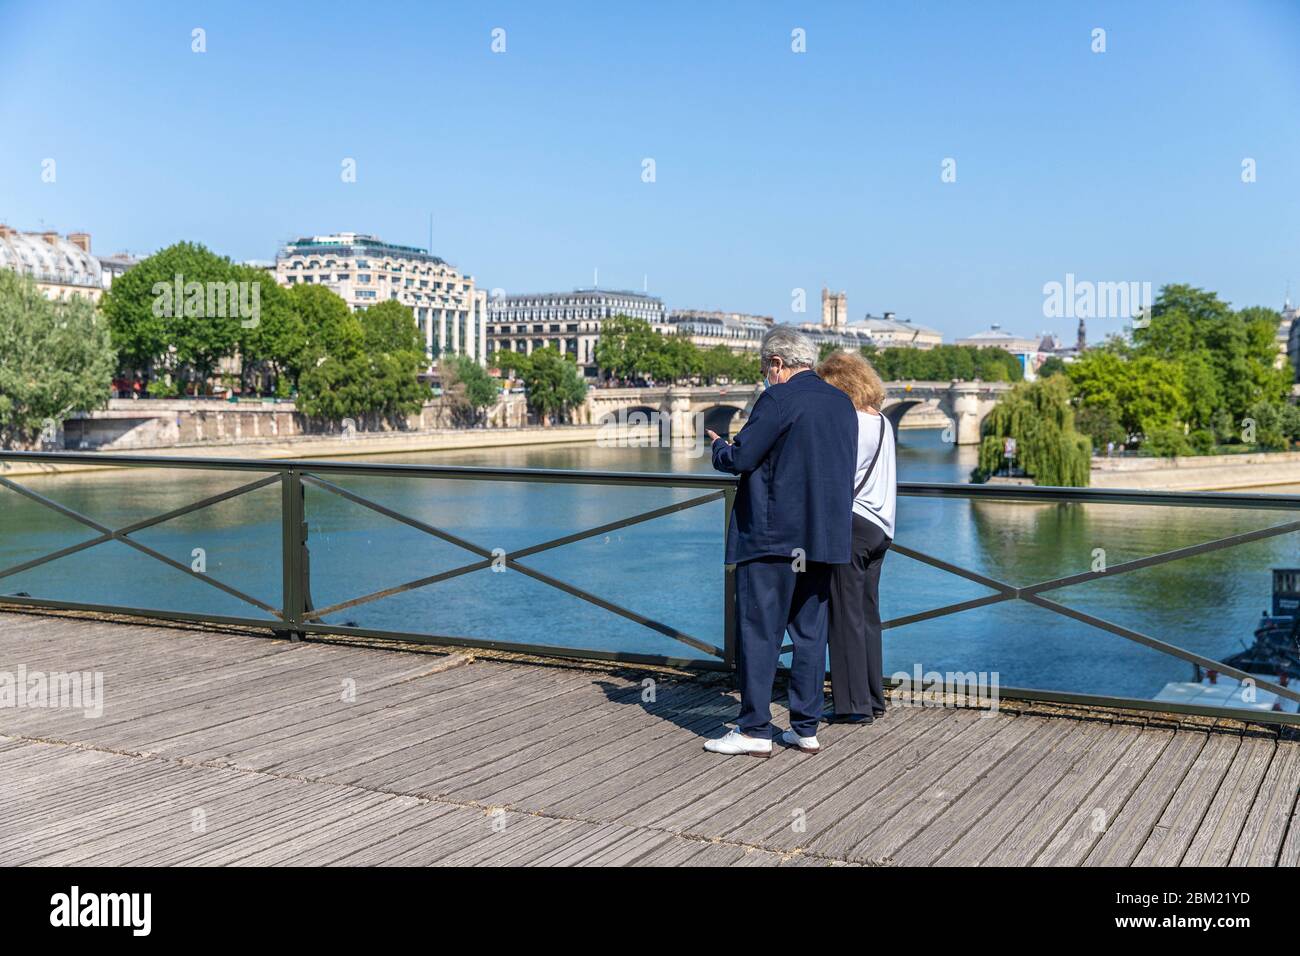 Two parisian crossing the Pont des arts in Paris during the lock down Coronavirus covid-19 Stock Photo